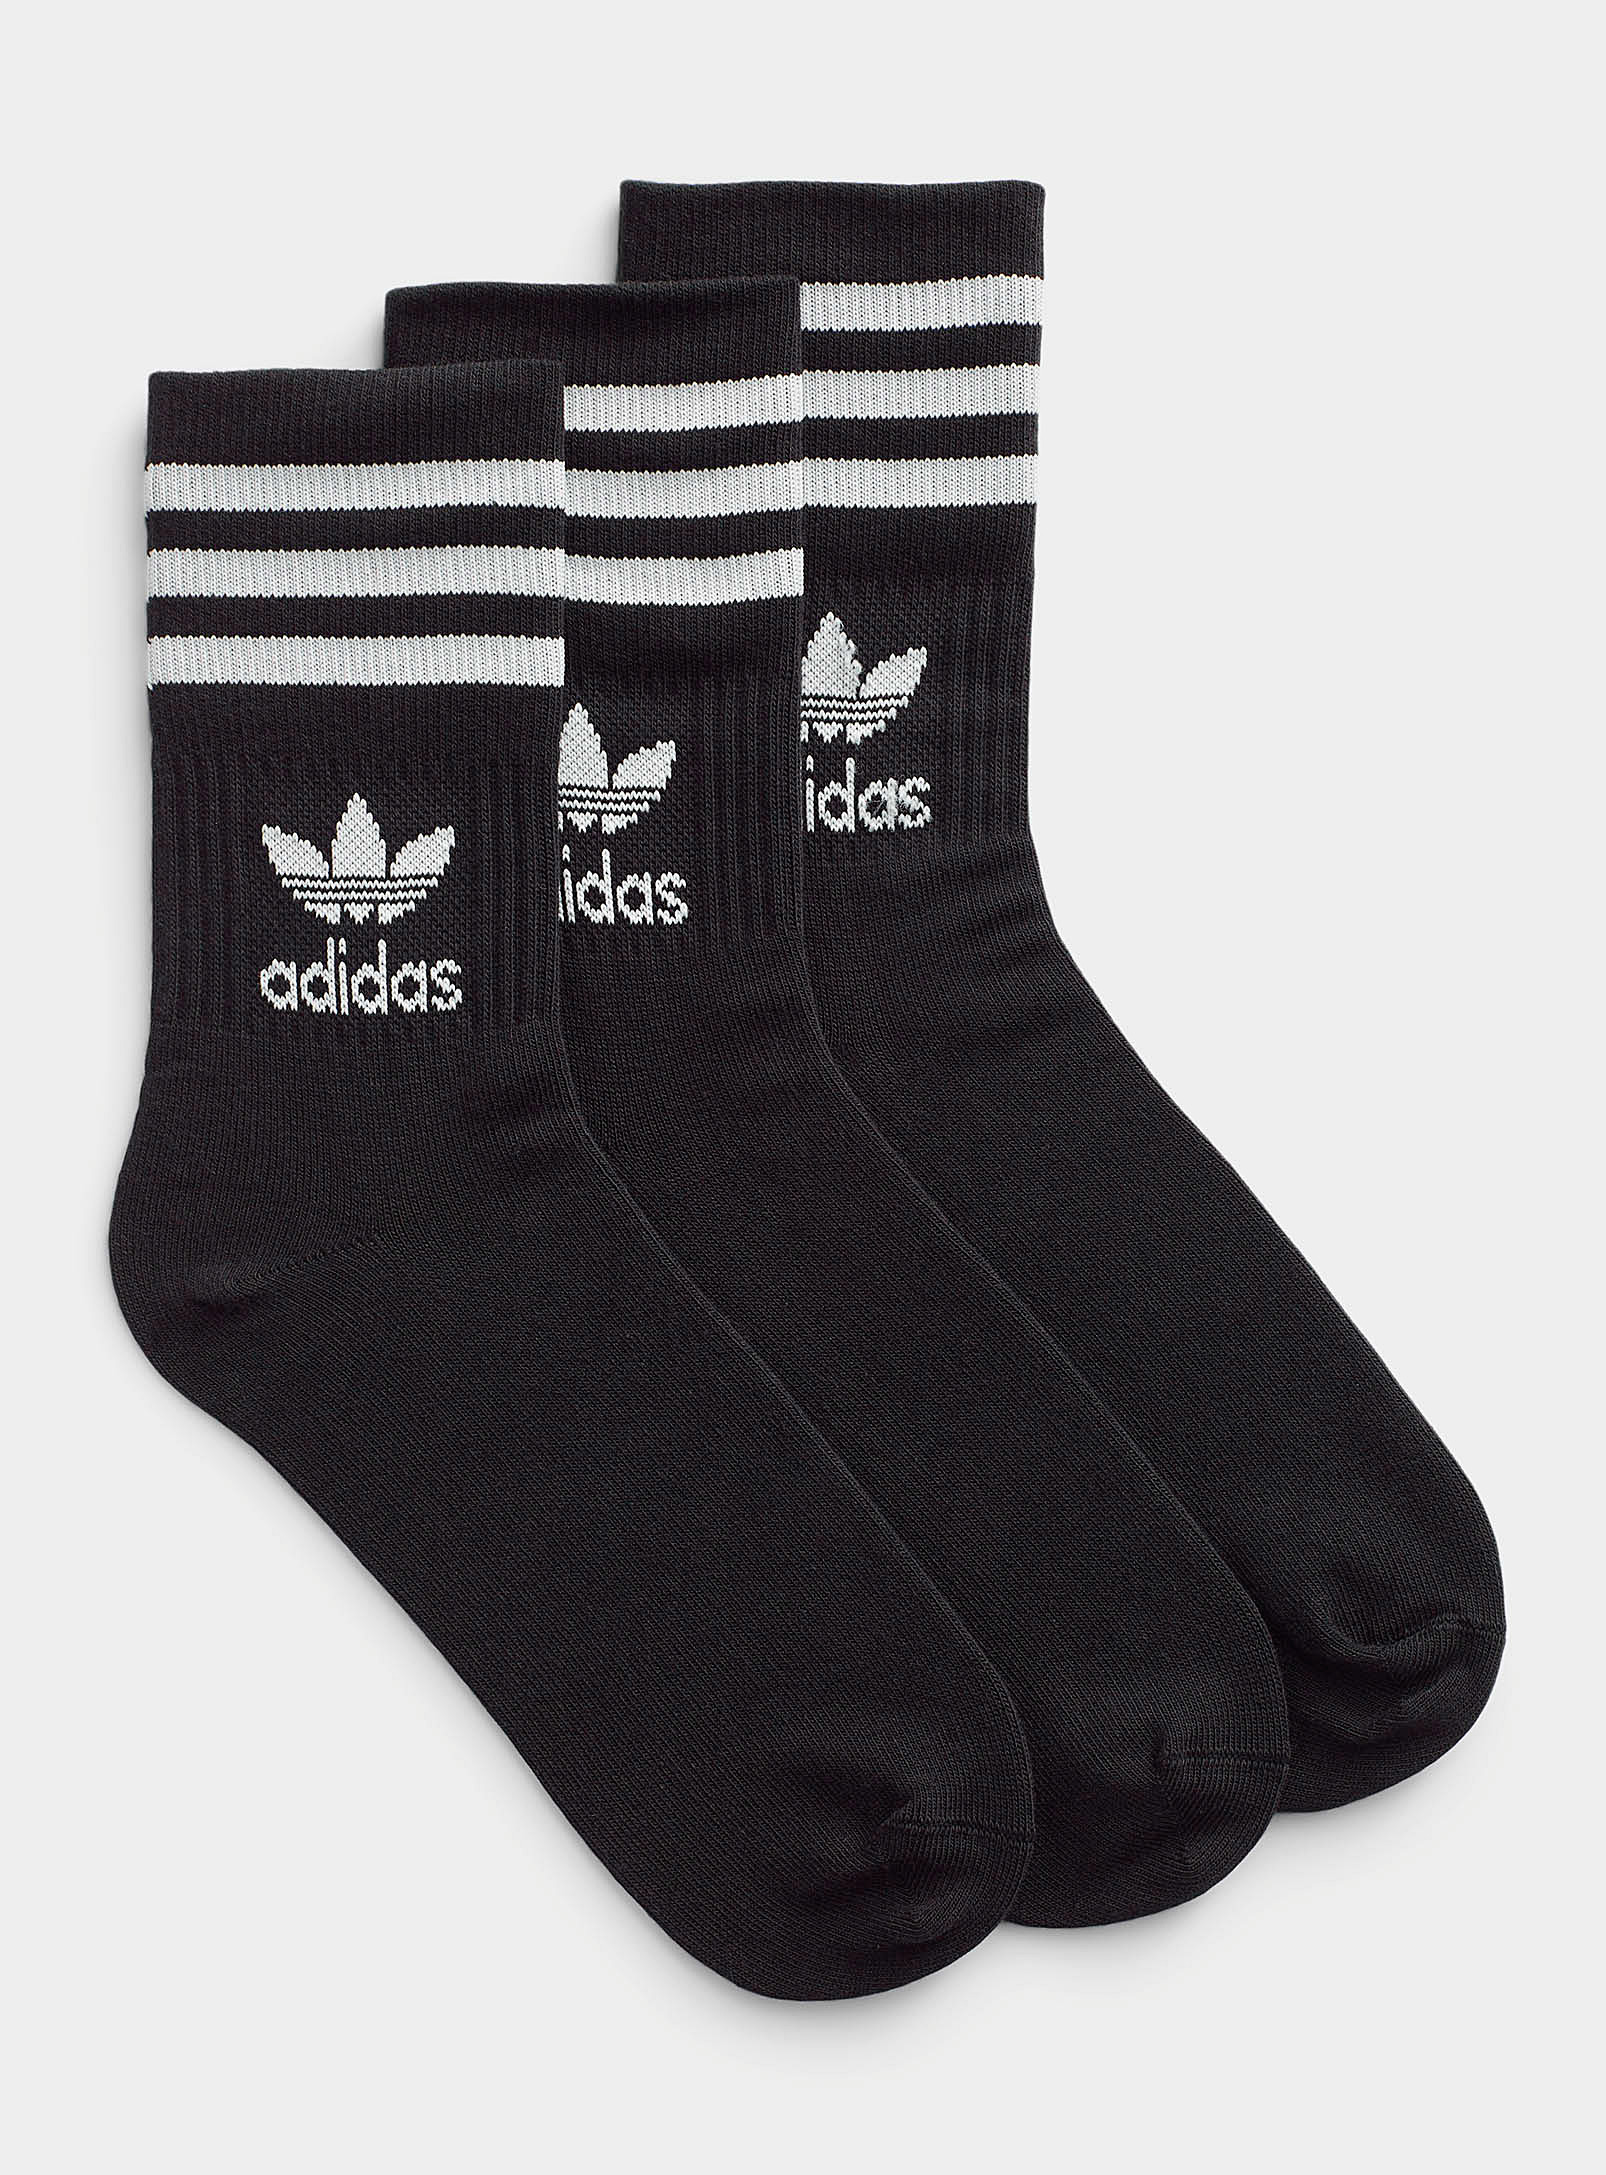 Adidas Originals Black Athletic Socks Set Of 3